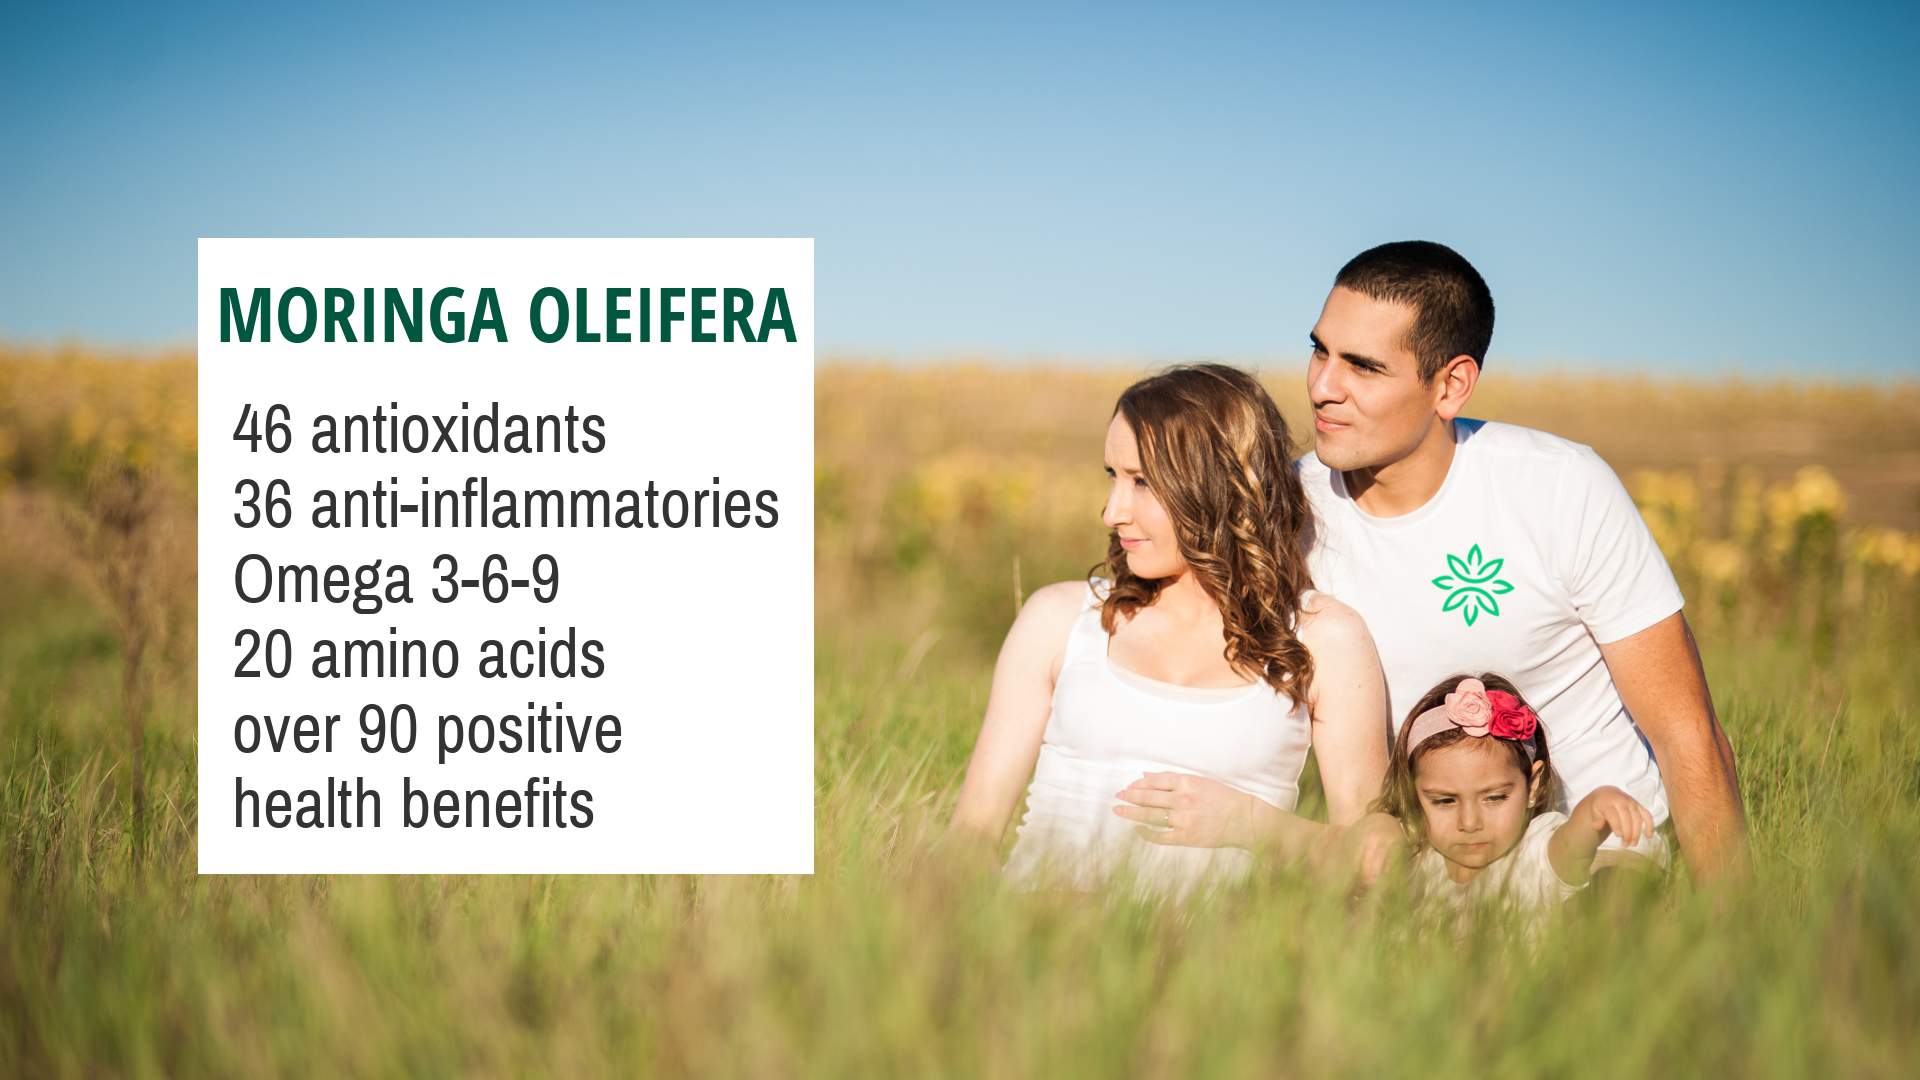 benefits of moringa oleifera 46 antioxidants, 36 anti-inflammatories, omega 3-6-9, 20 amino acids, over 90 positive health benefits